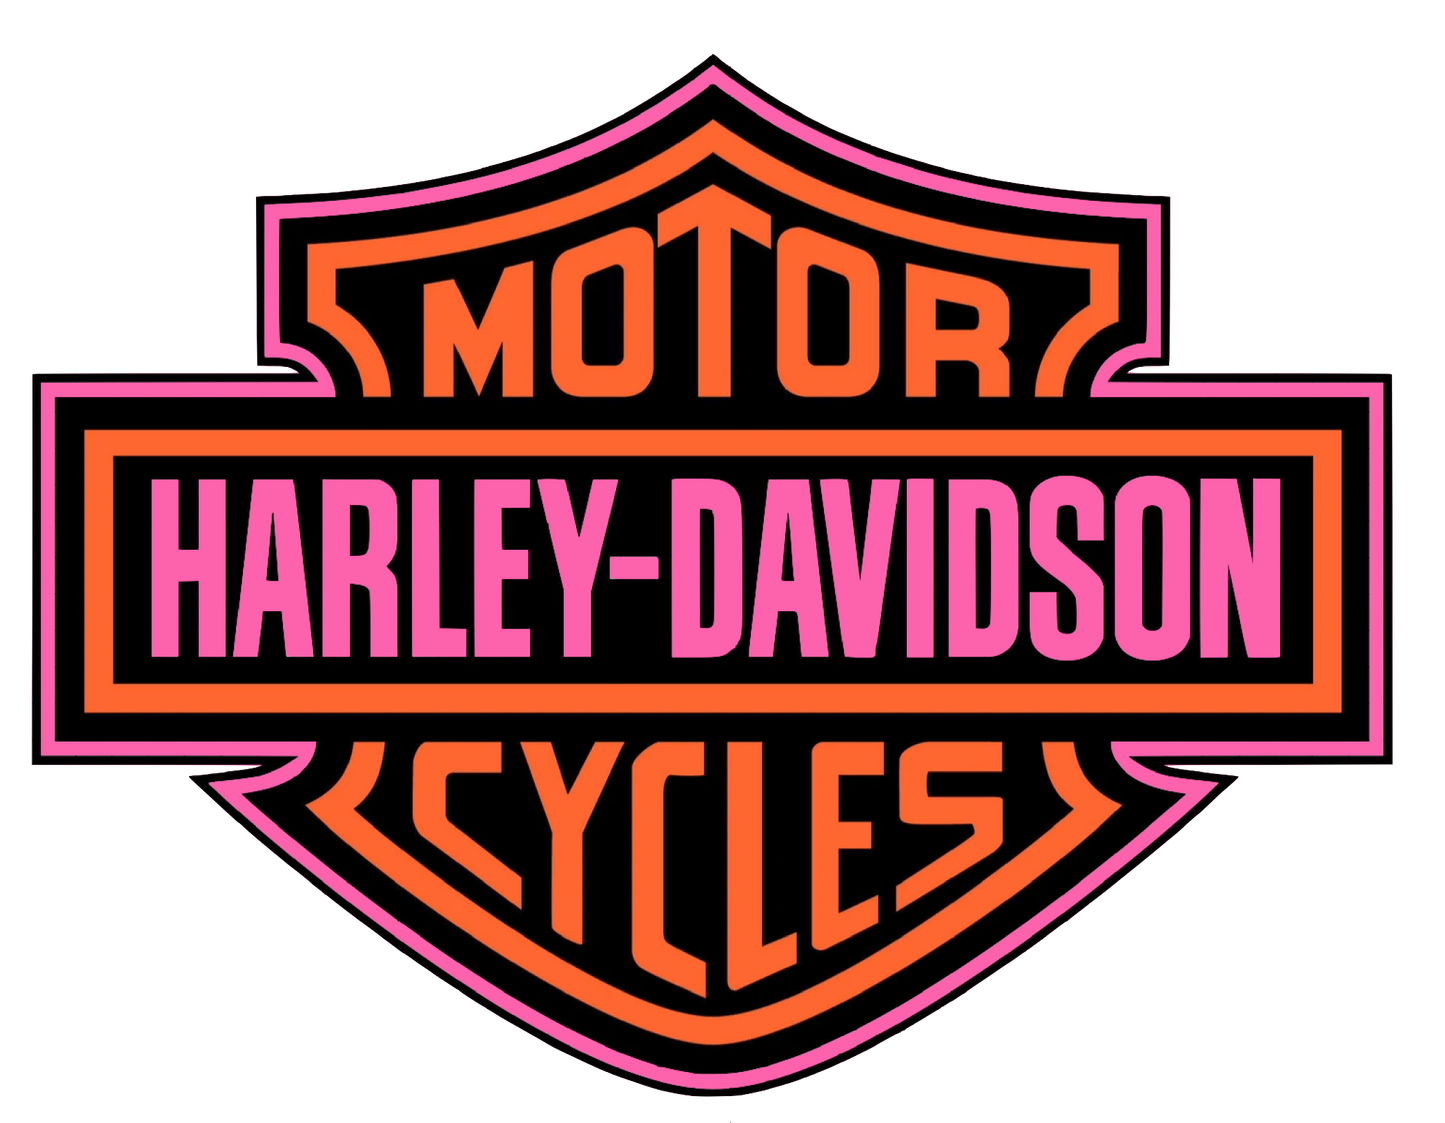 Harley Davidson Clip Art -Seven different Colors